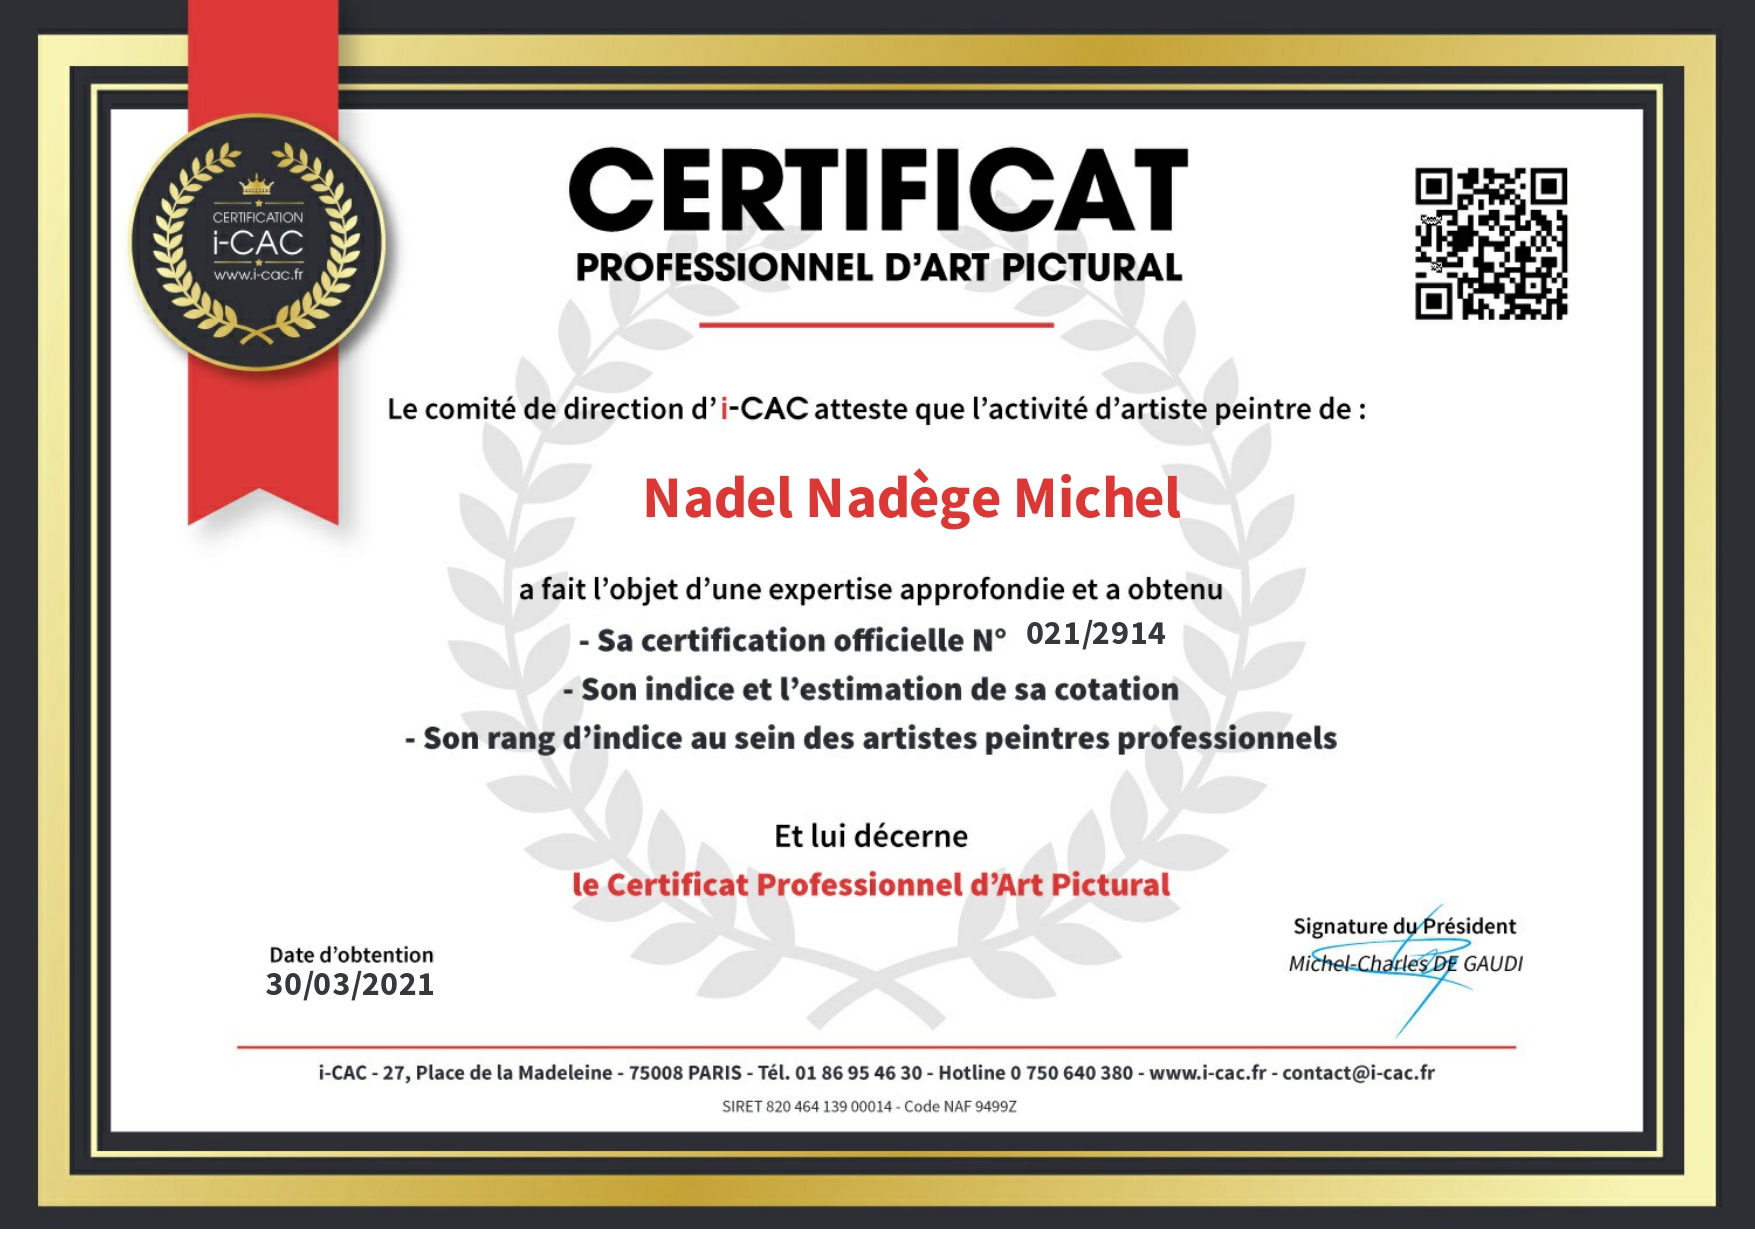 certificat-professionnel-d'art pictural icac-michel-nadel-nadege